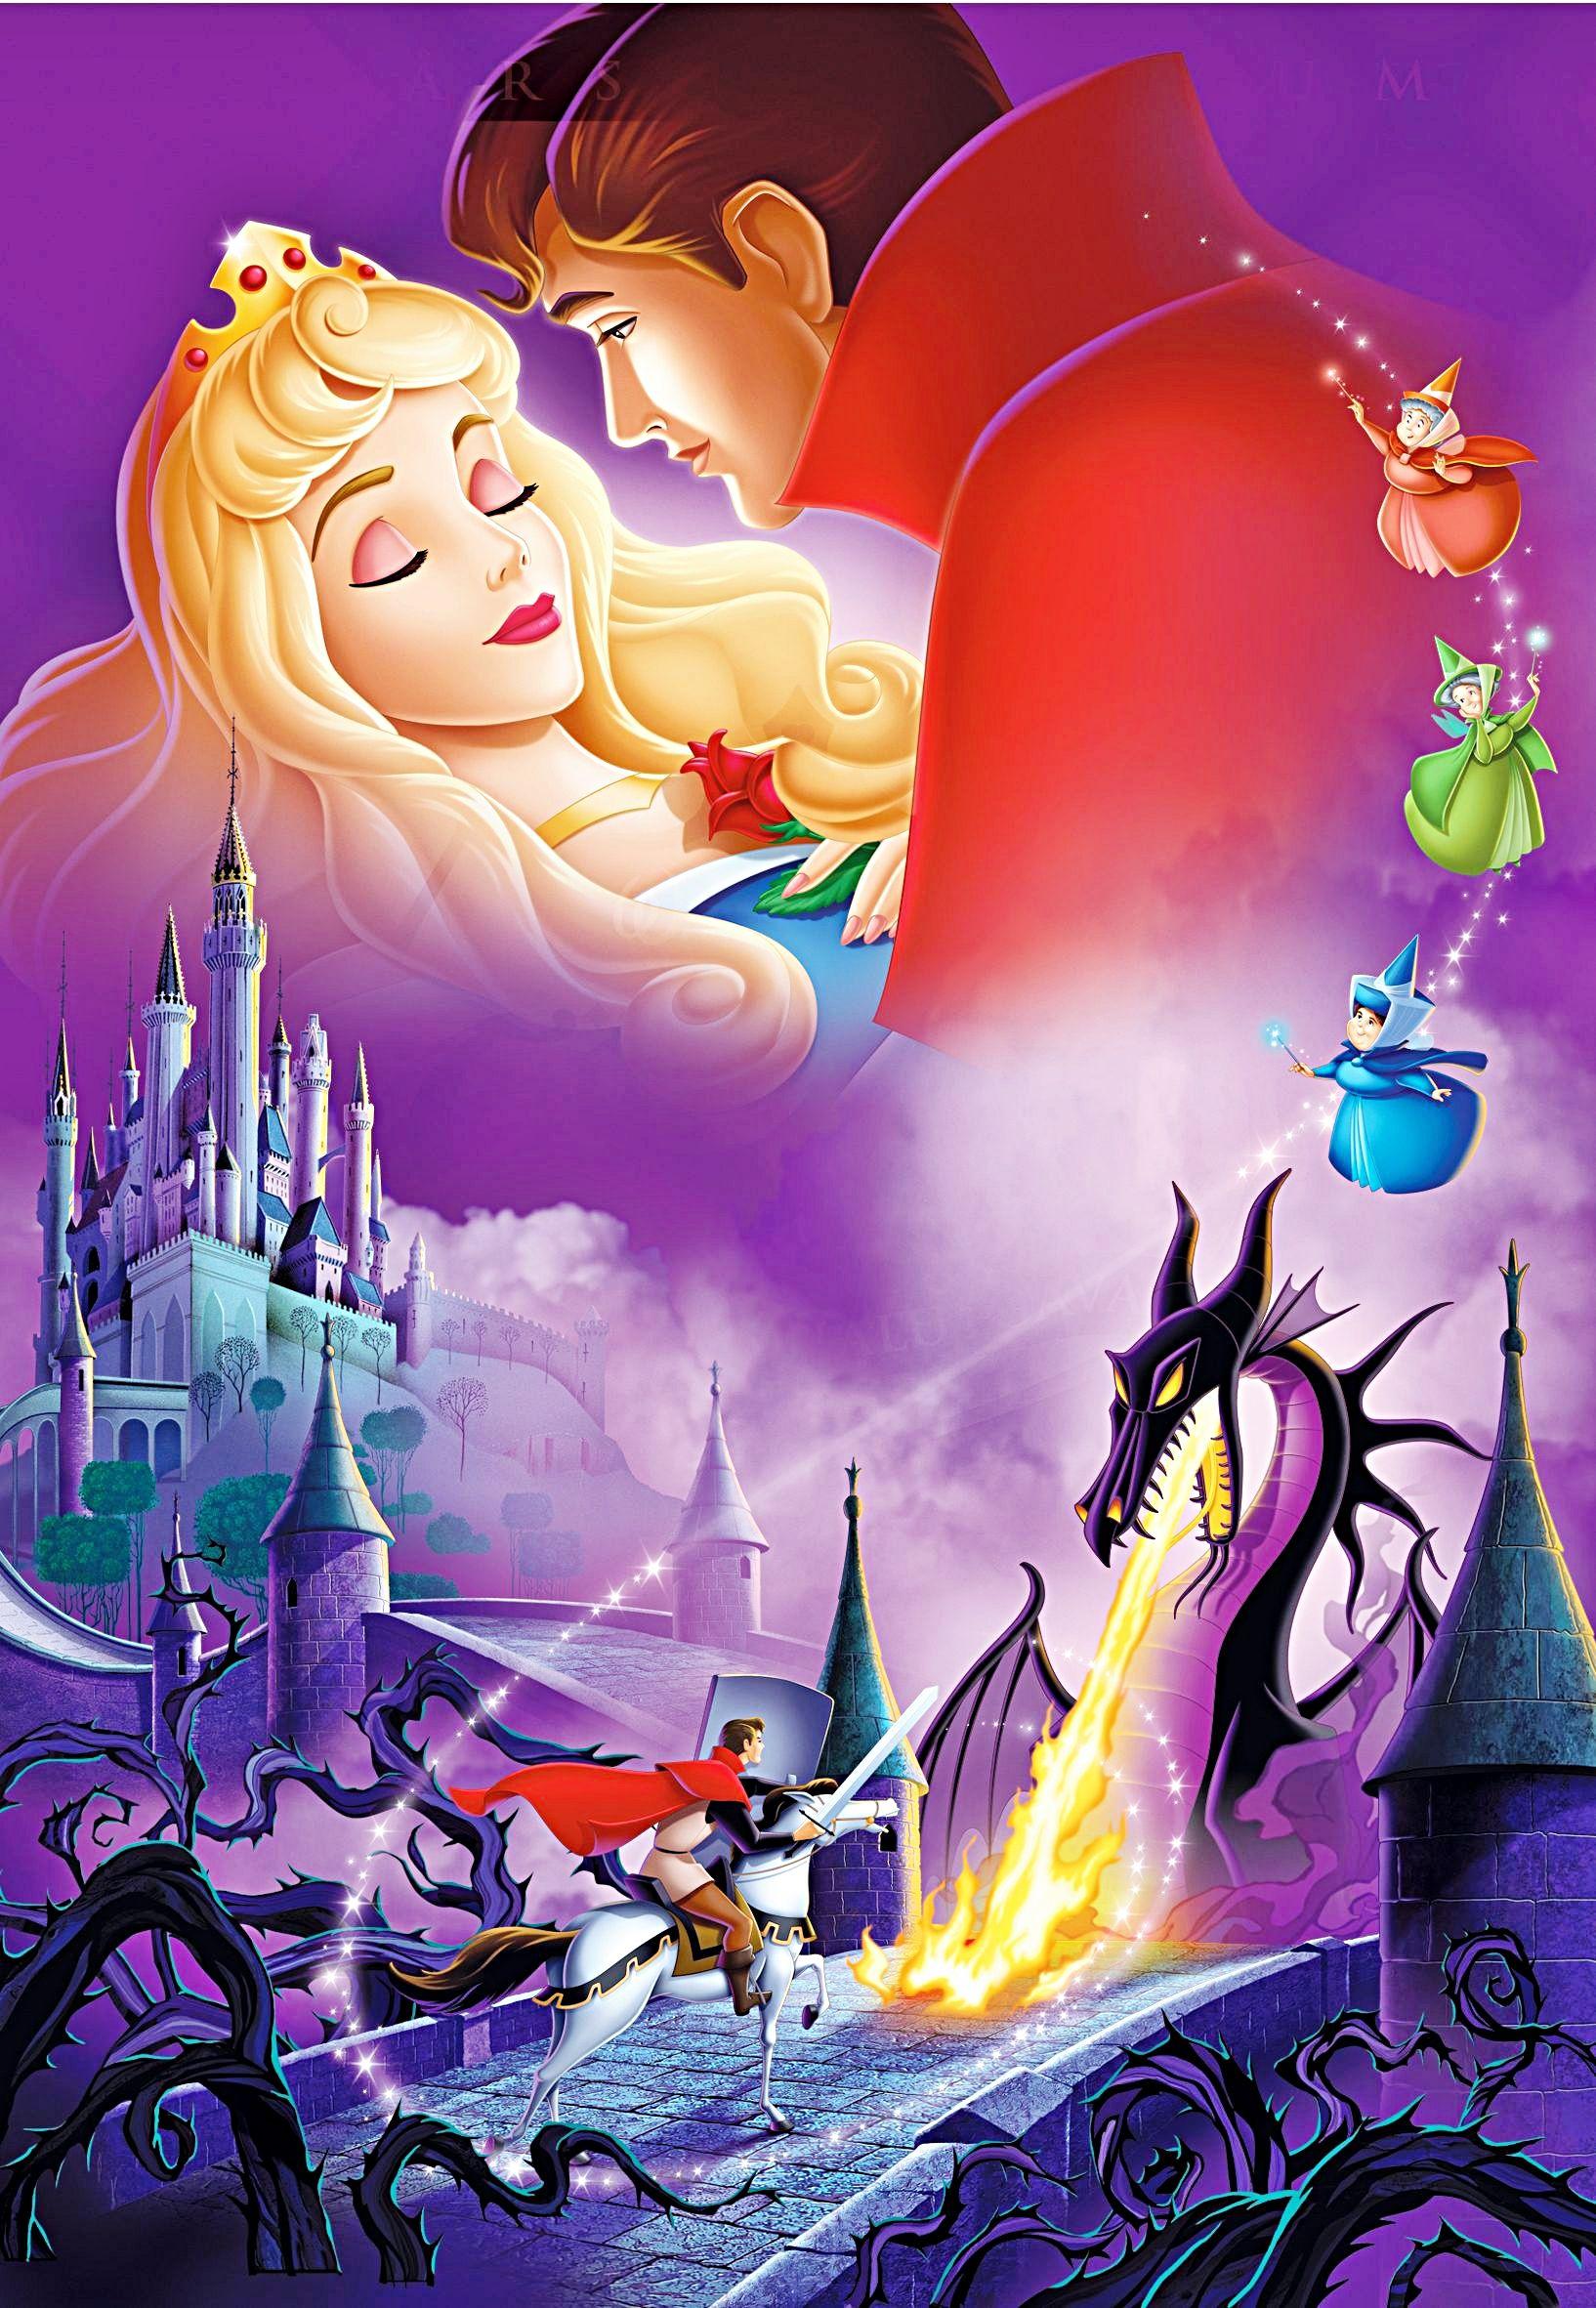 Walt Disney Characters Sleeping Beauty HD Image Wallpaper for Phone